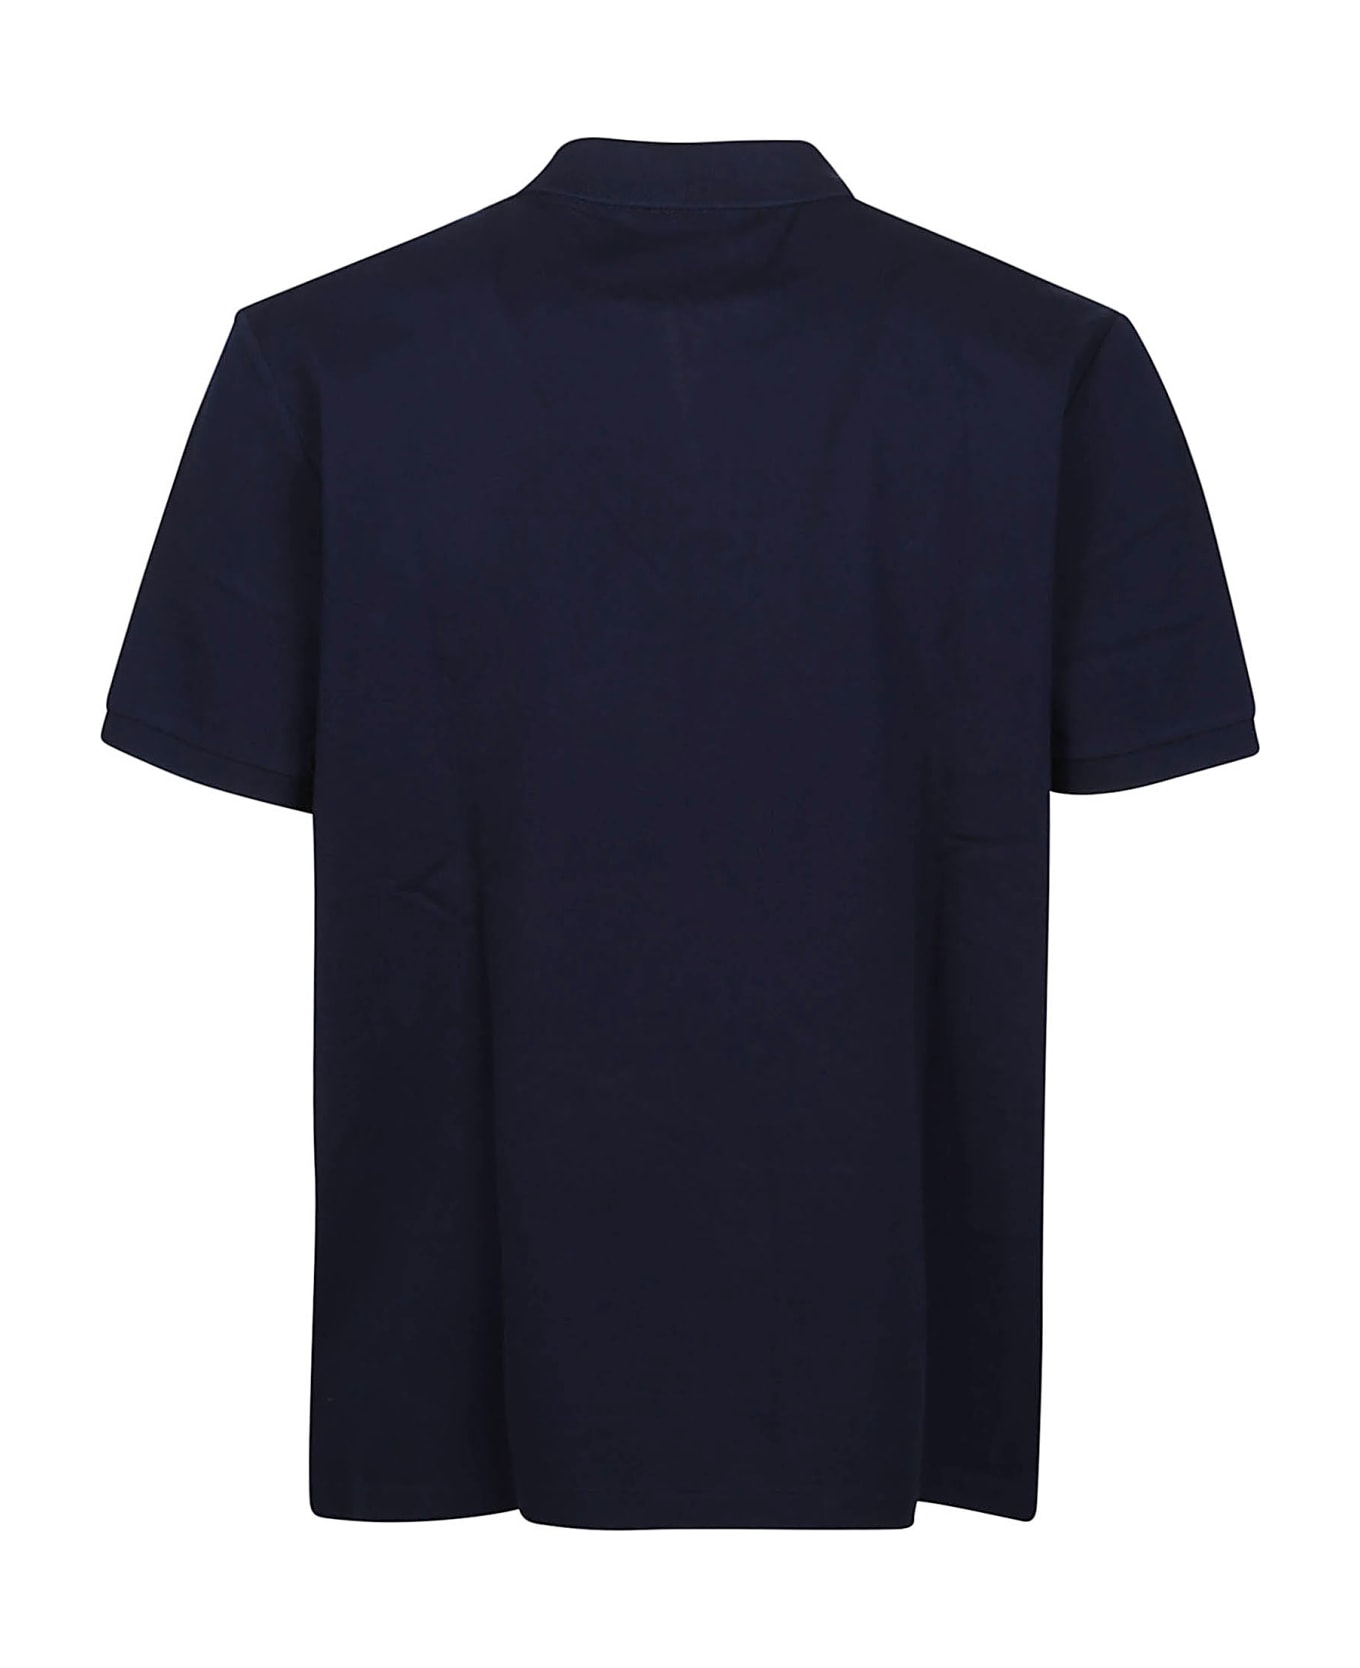 Polo Ralph Lauren Short Sleeve Polo Shirt - Refined Navy